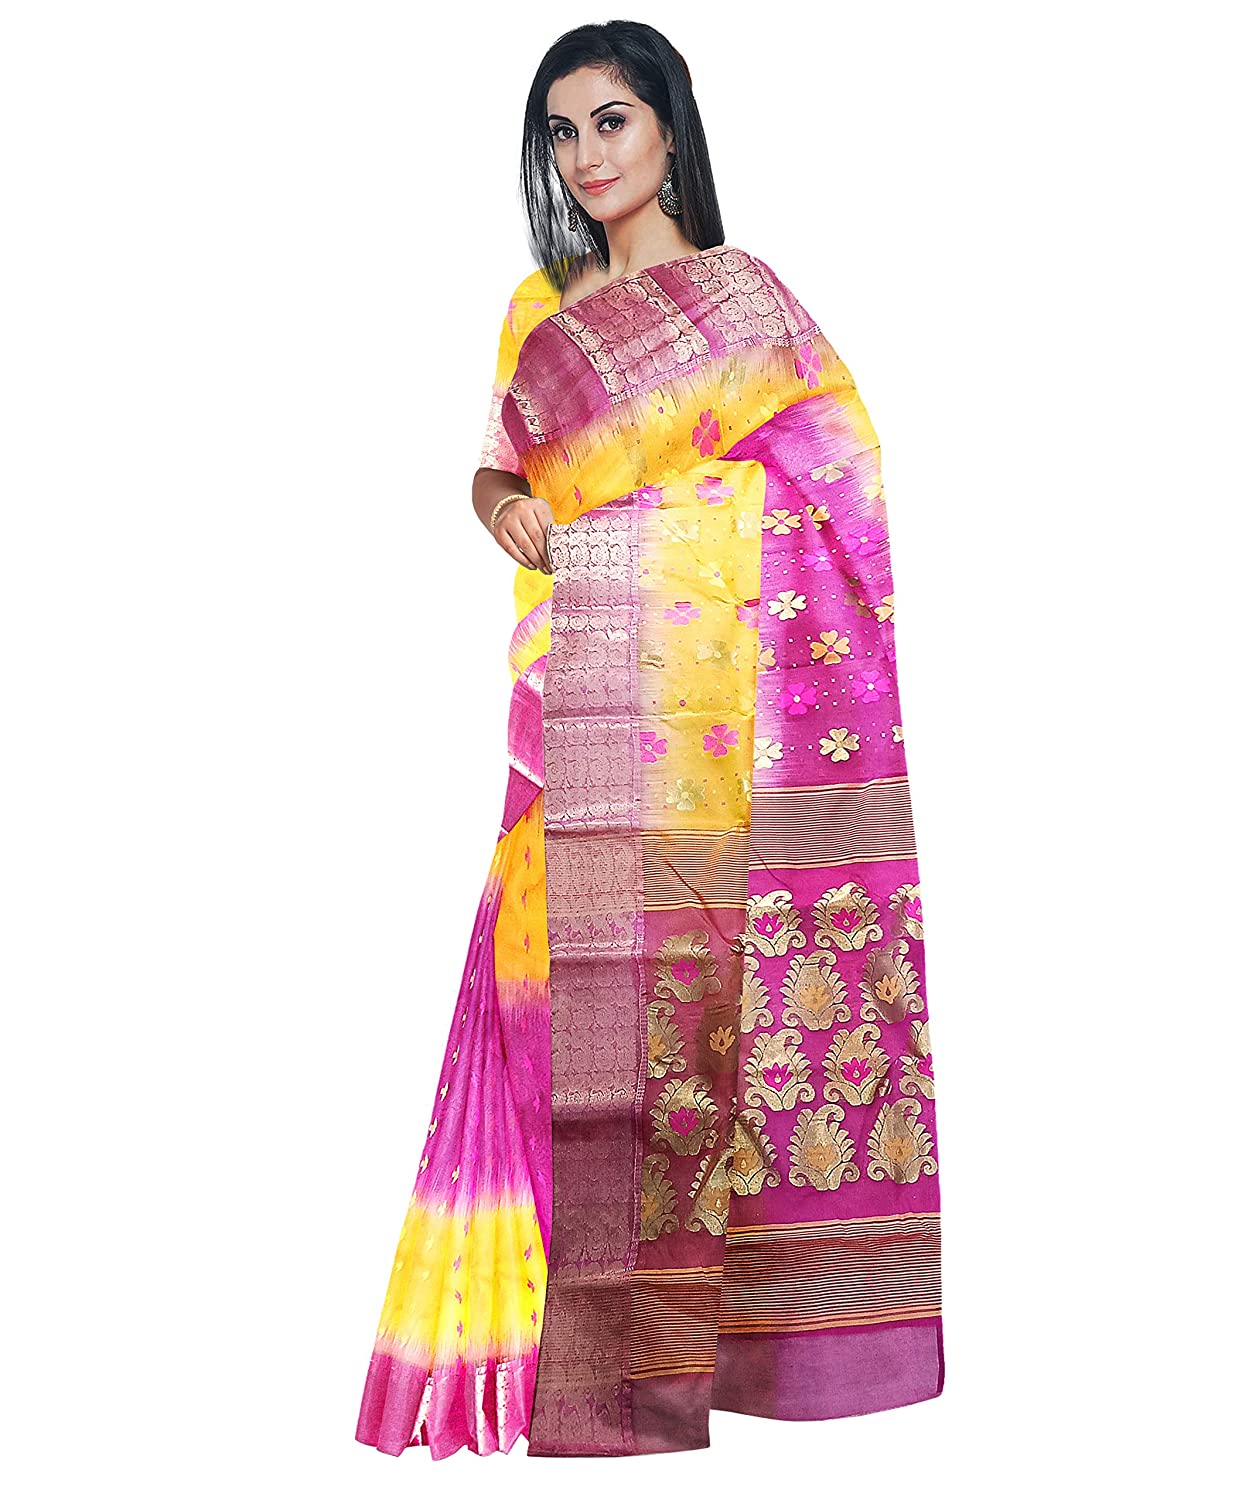 Pradip Fabrics Ethnic Women's Tant Silk Pink and Yellow Color Baluchuri Saree